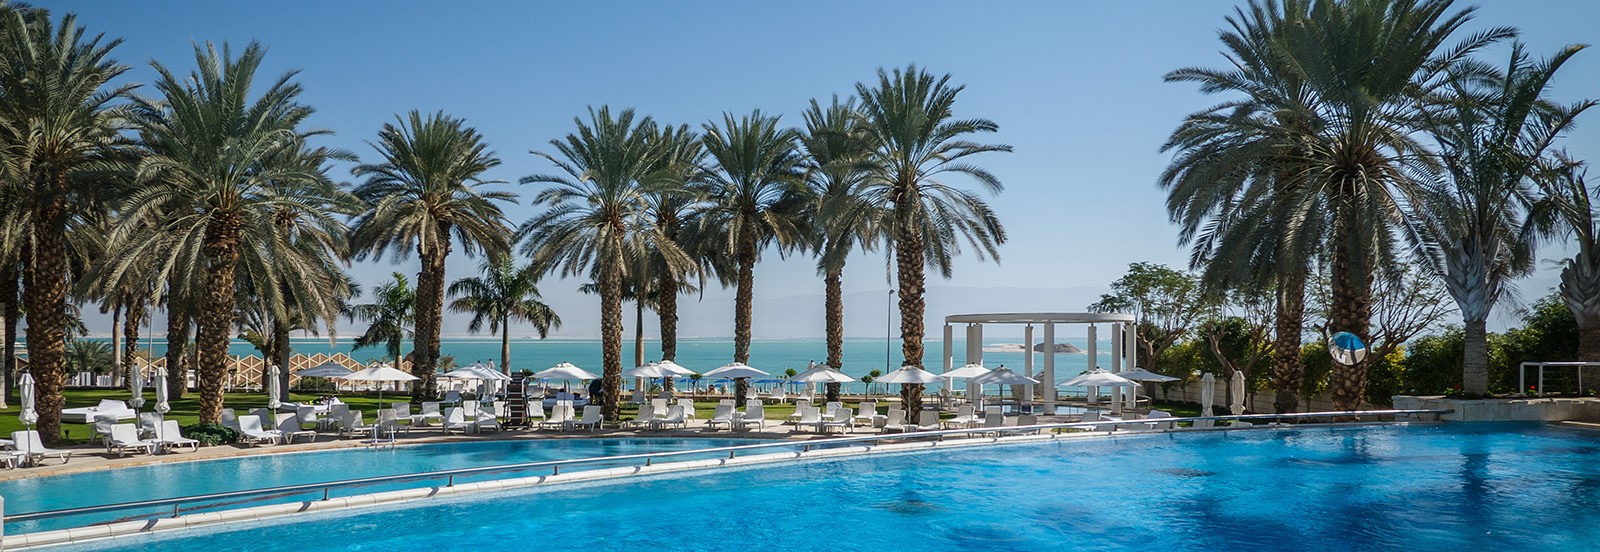 Isrotel Dead Sea Resort & Spa